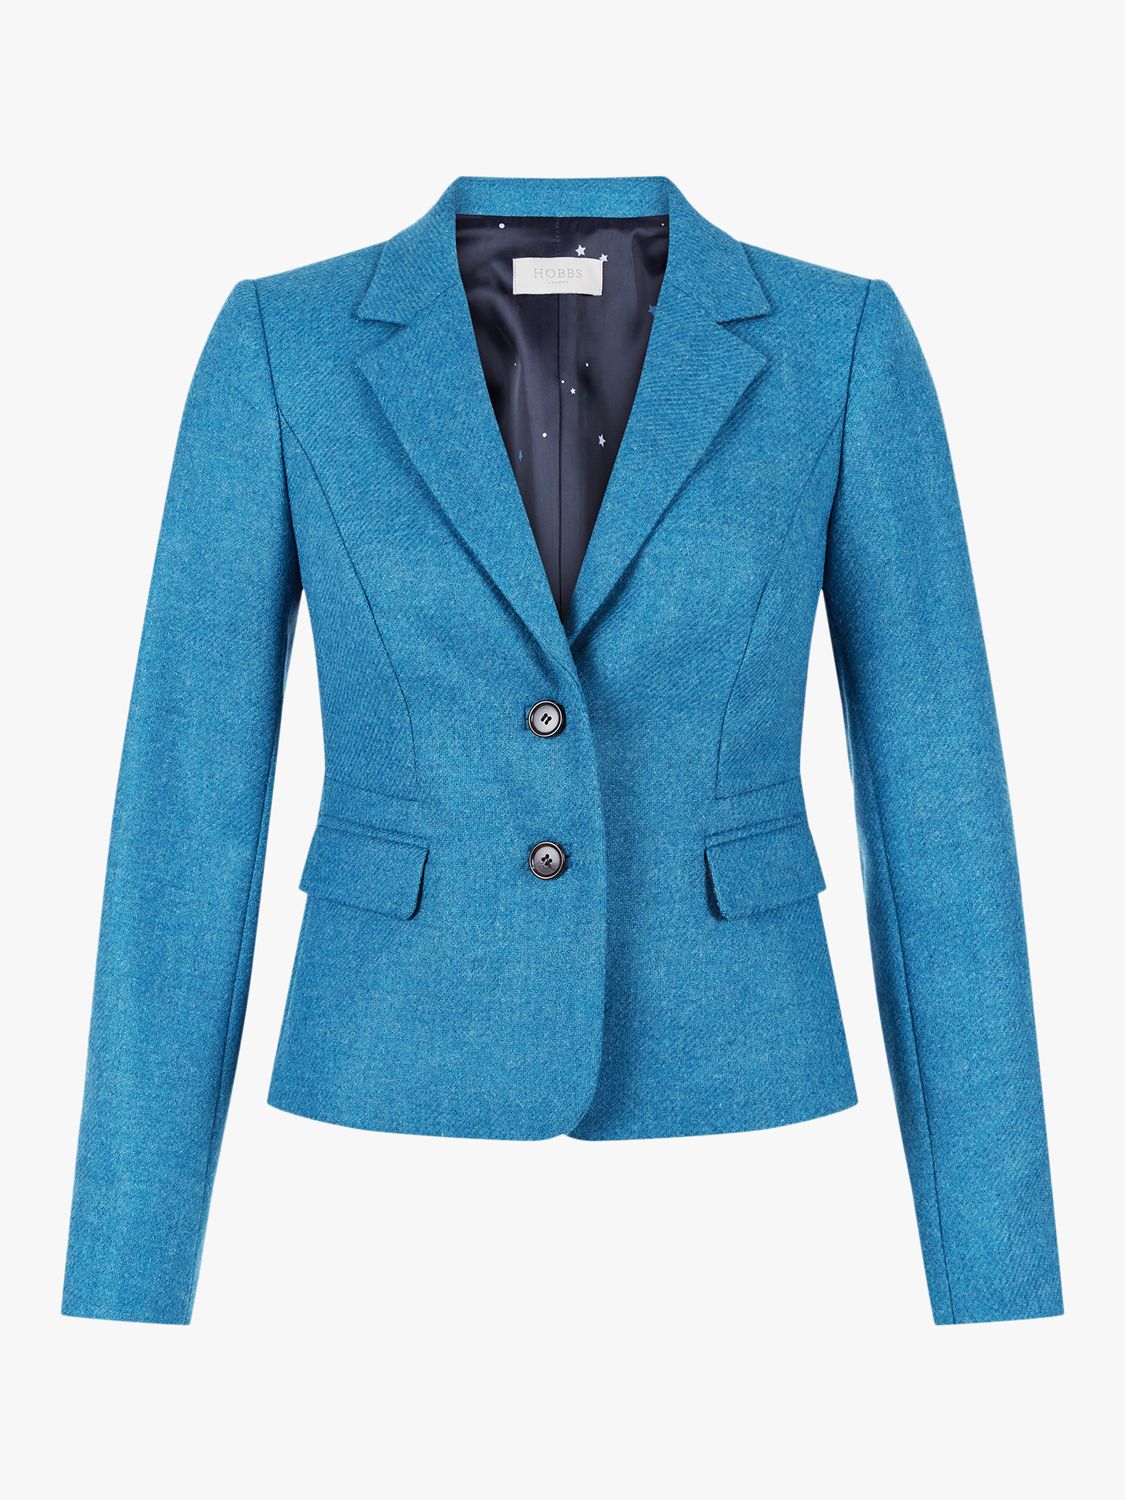 Hobbs Hackness Wool Jacket, Kingfisher Blue at John Lewis & Partners